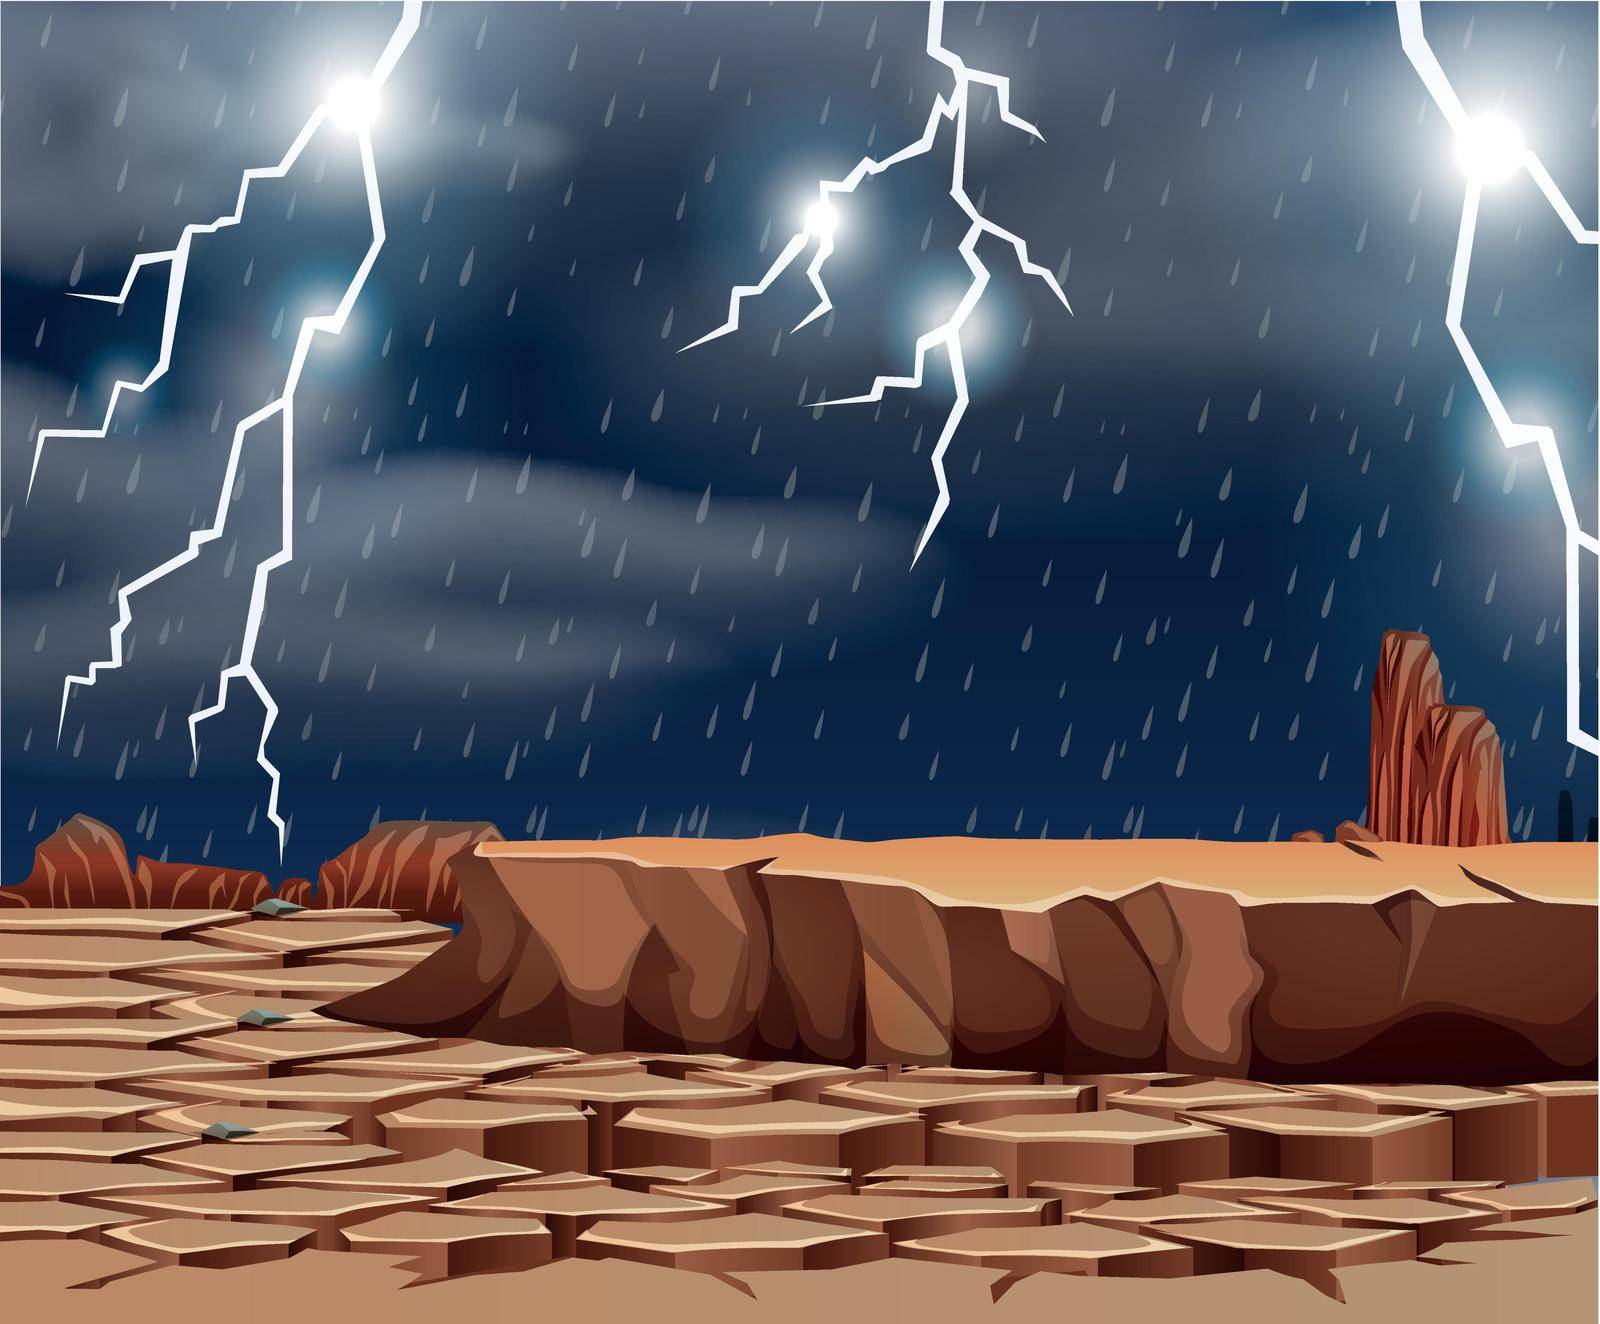 Bad weather at te dry land illustration